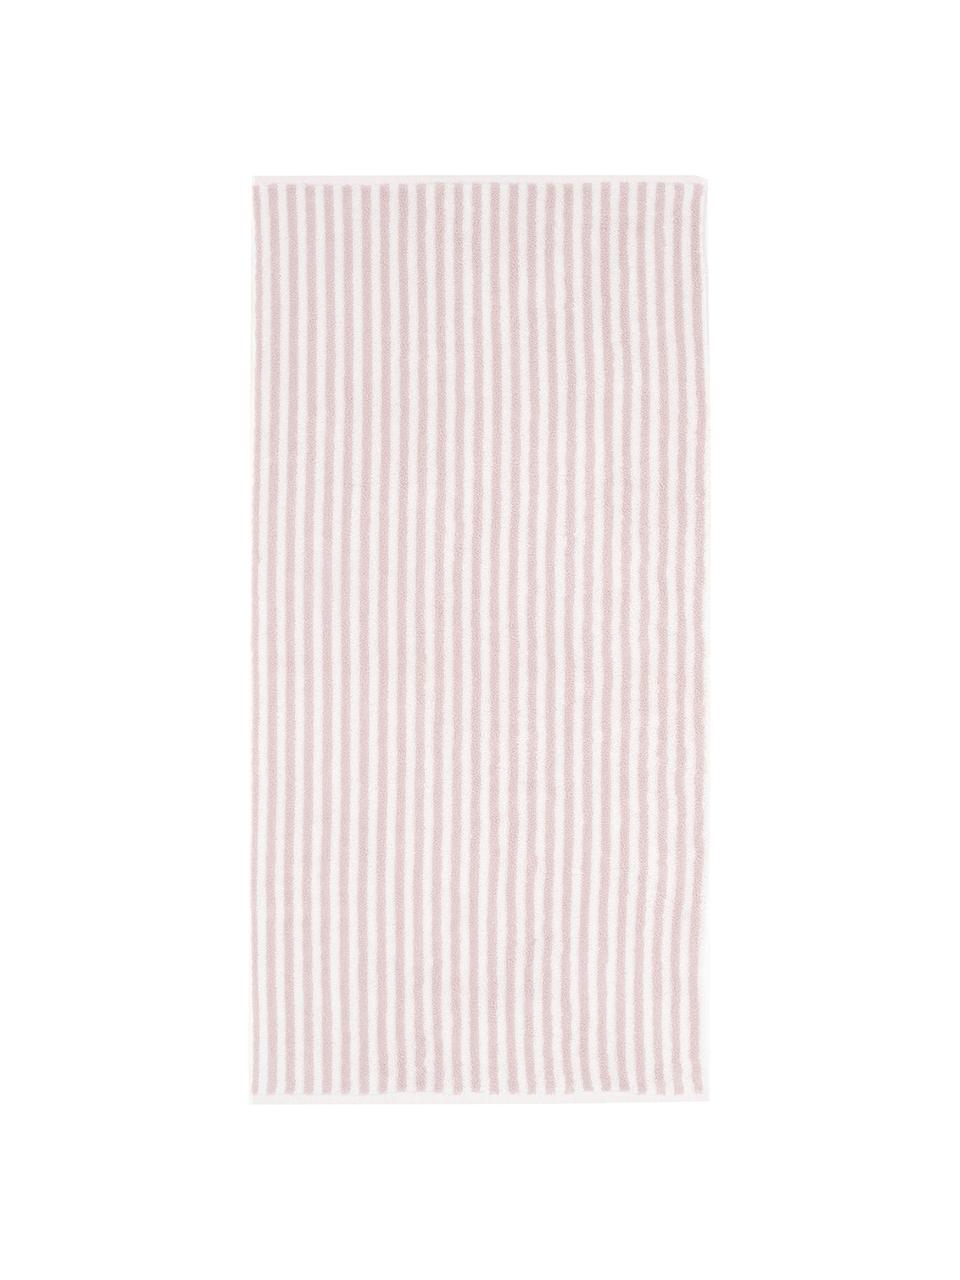 Pruhované ručníky Viola, 2 ks, Růžová, bílá, Ručník, Š 50 cm, D 100 cm, 2 ks